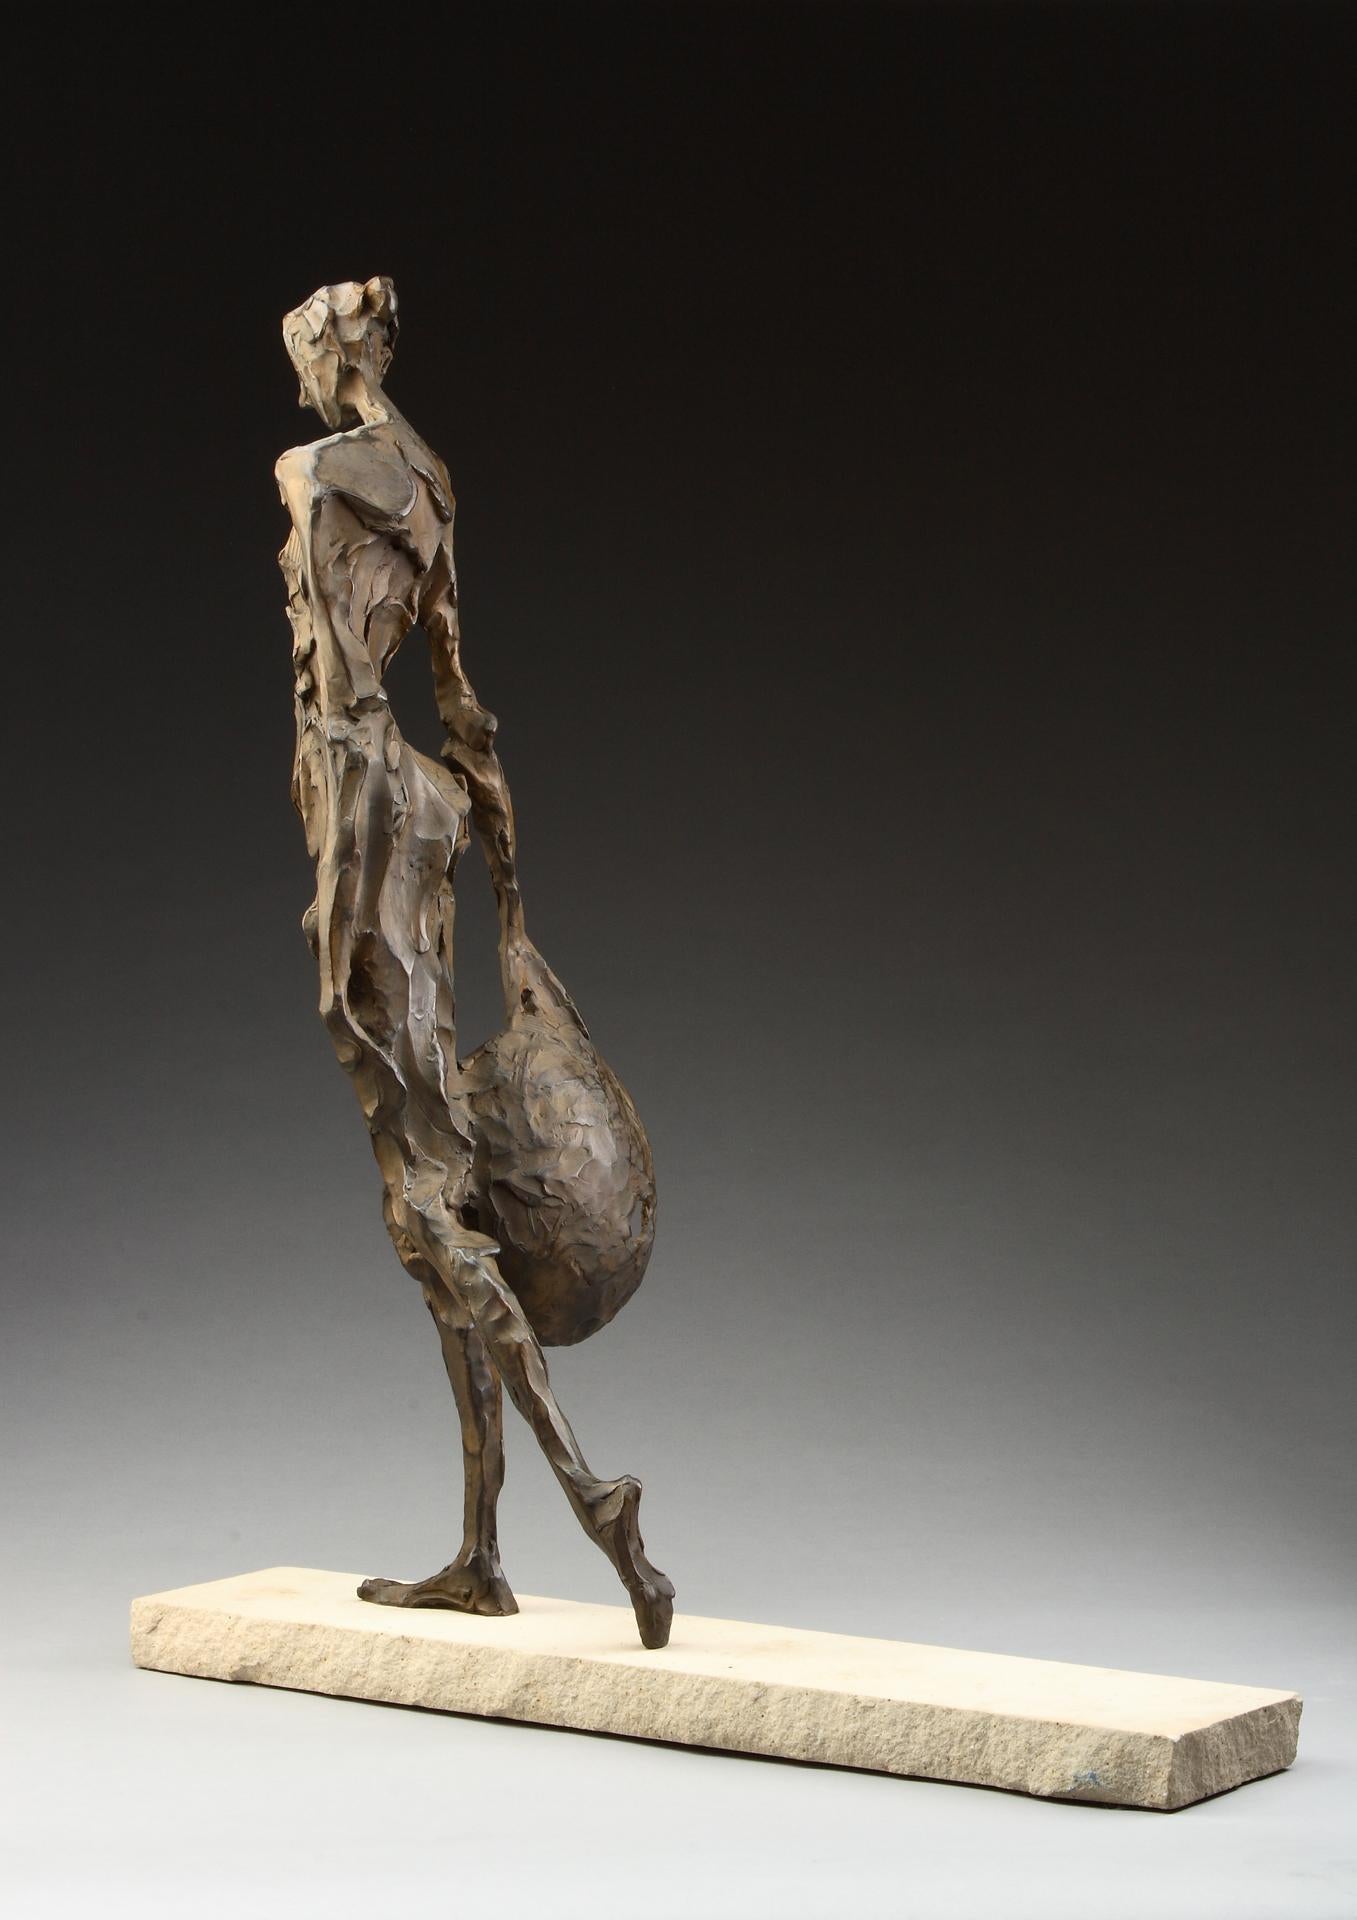 Wearing Thin by Jane DeDecker
Abstract Figurative Bronze
29x15x11